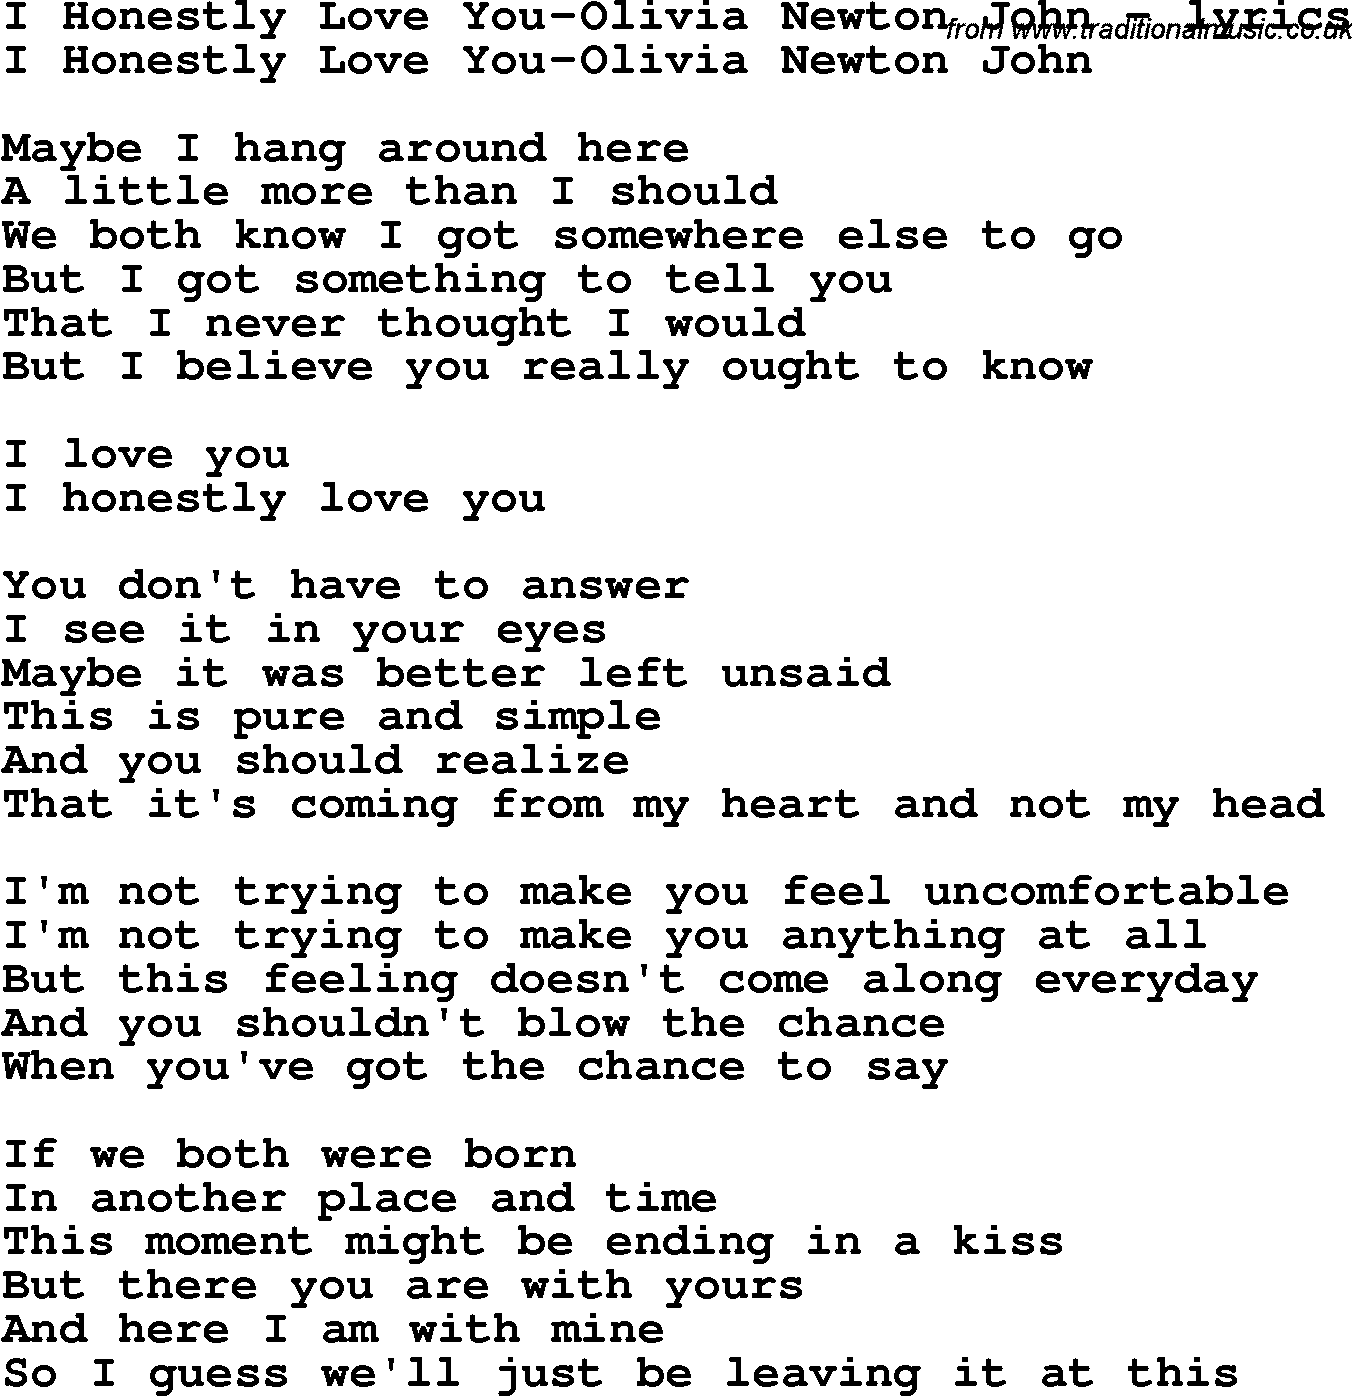 Love Song Lyrics for: I Honestly Love You-Olivia Newton John